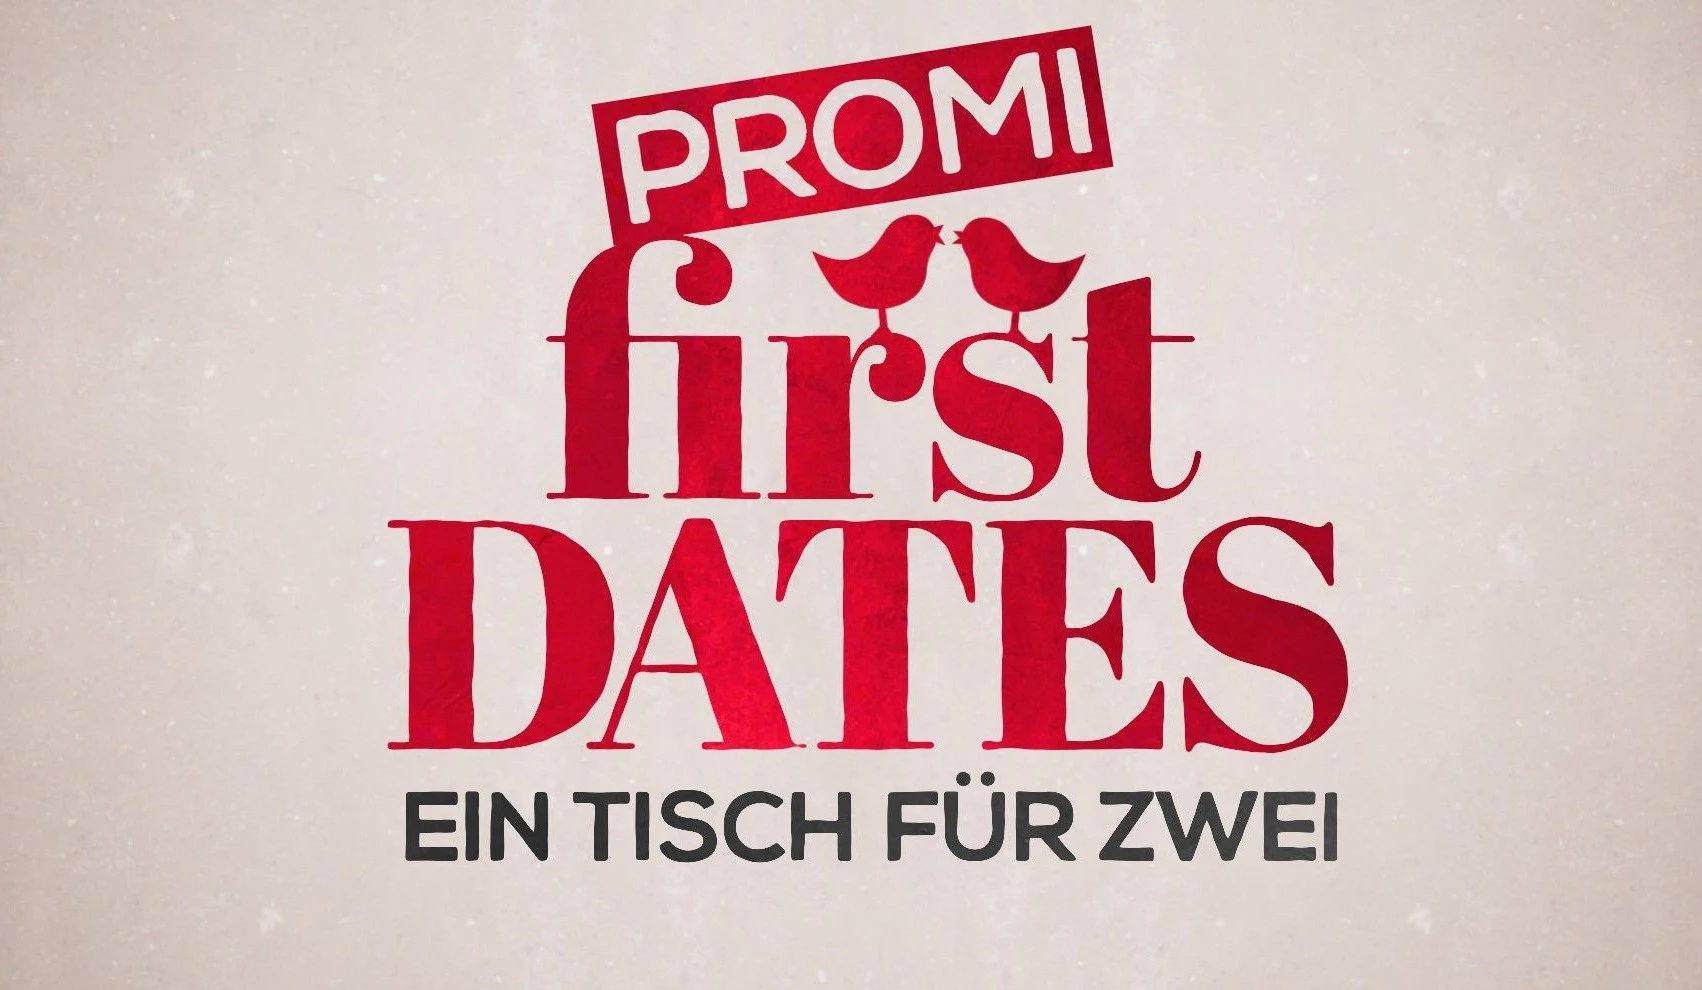 Das First Dates Promi Special